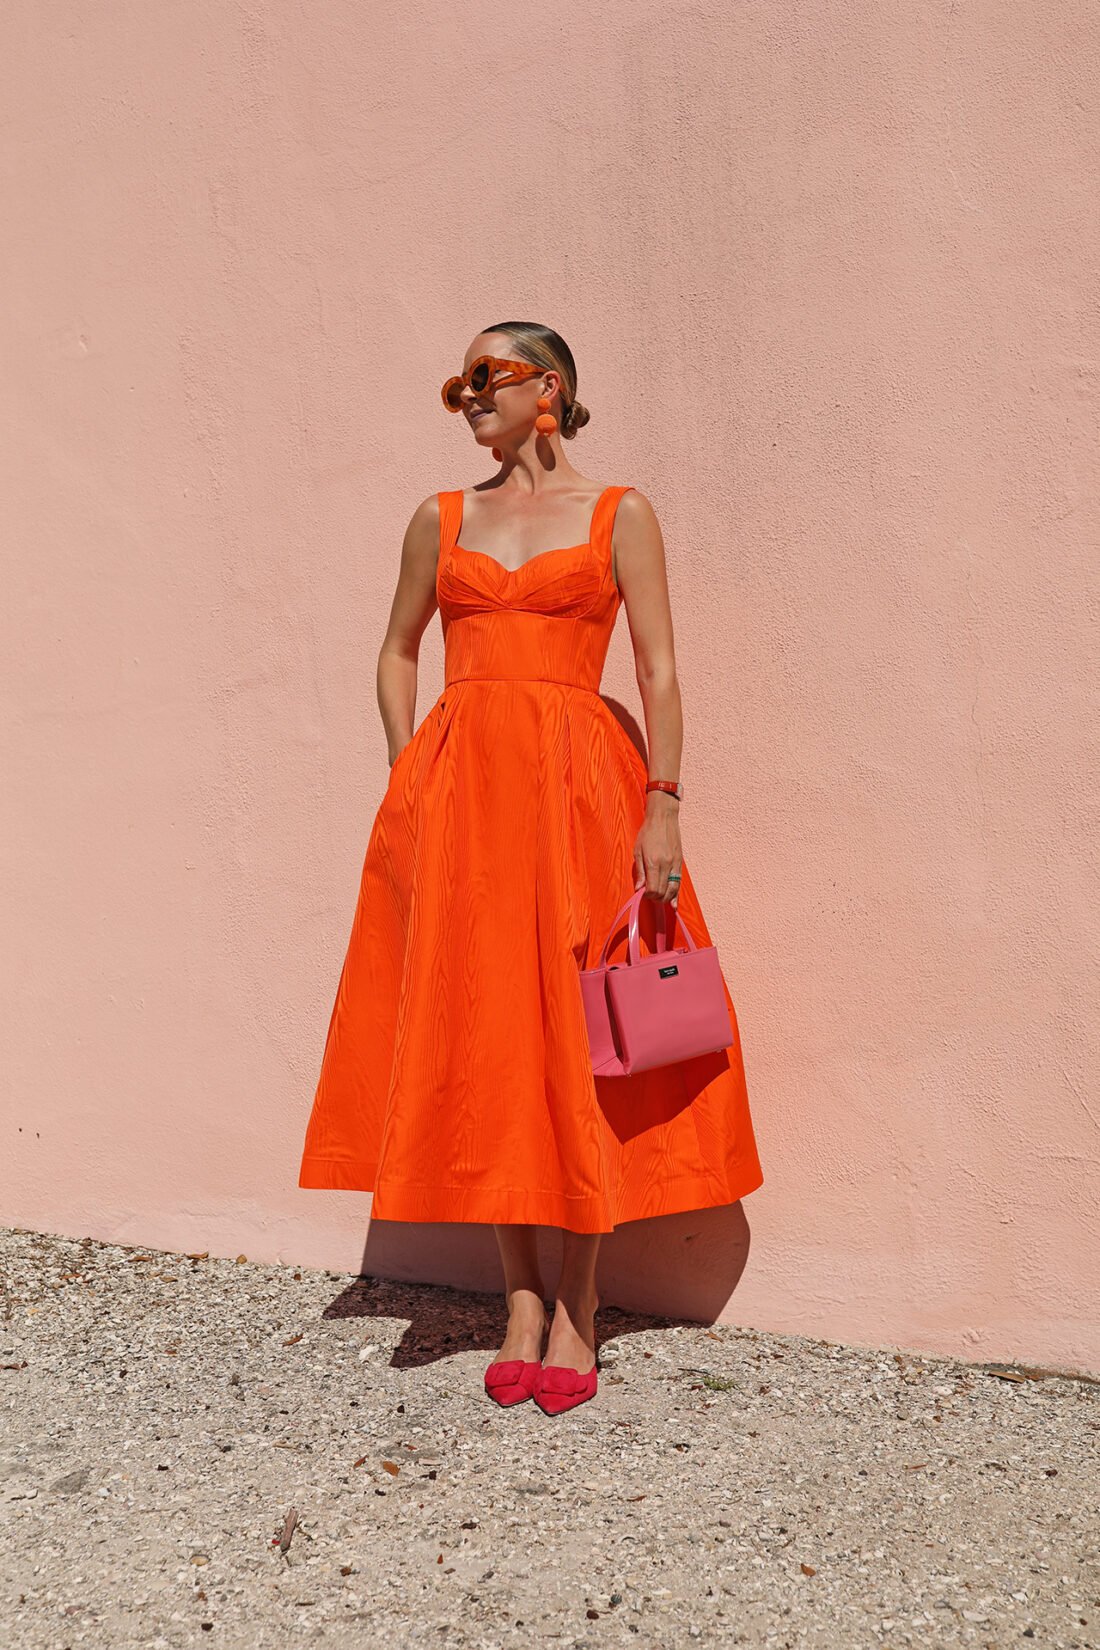 Simple orange dress design #foryou #pageforyou #foryou | TikTok